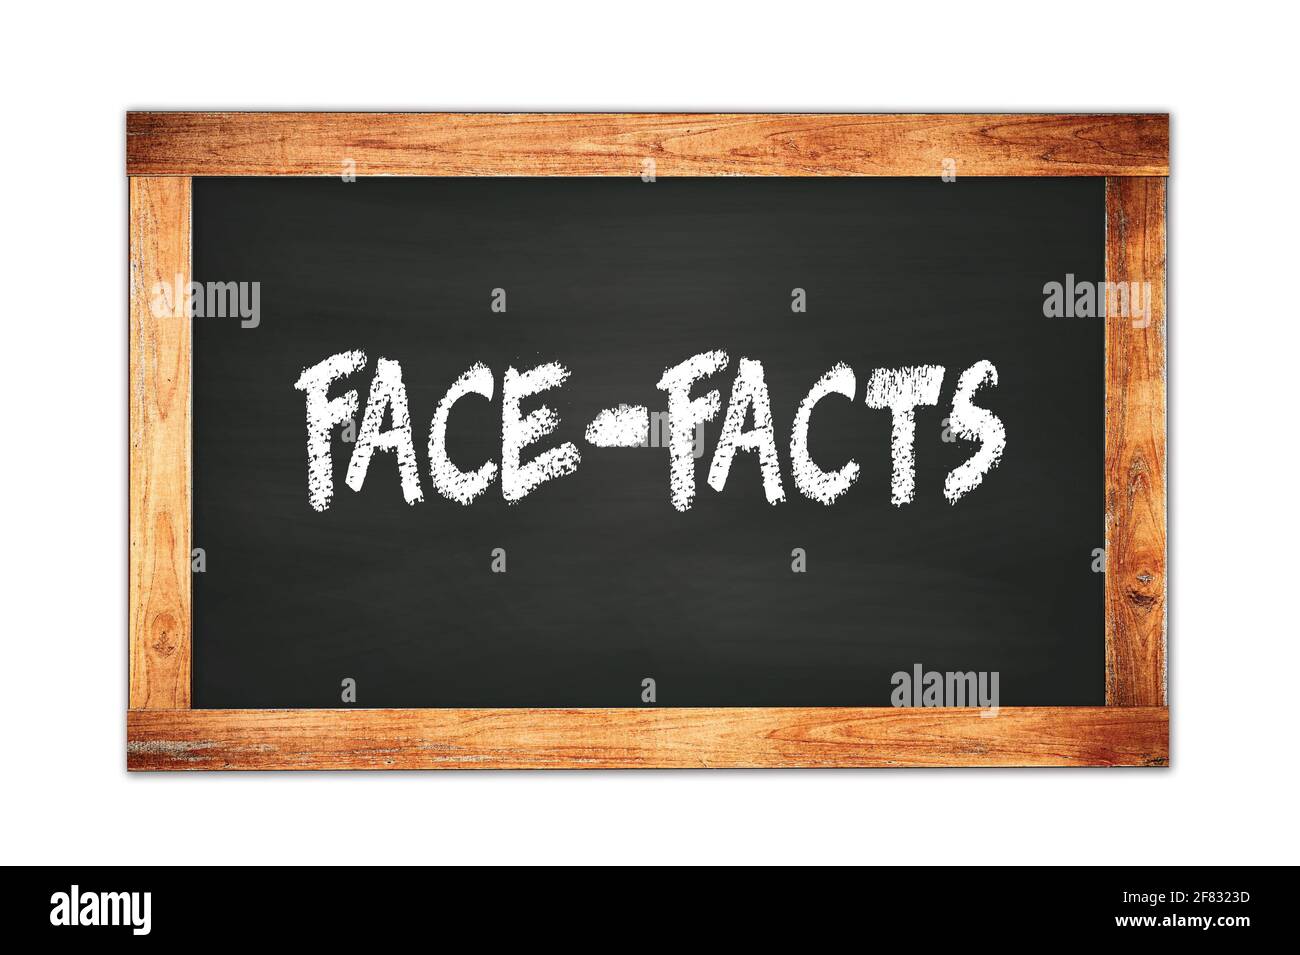 FACE-FACTS text written on black wooden frame school blackboard. Stock Photo